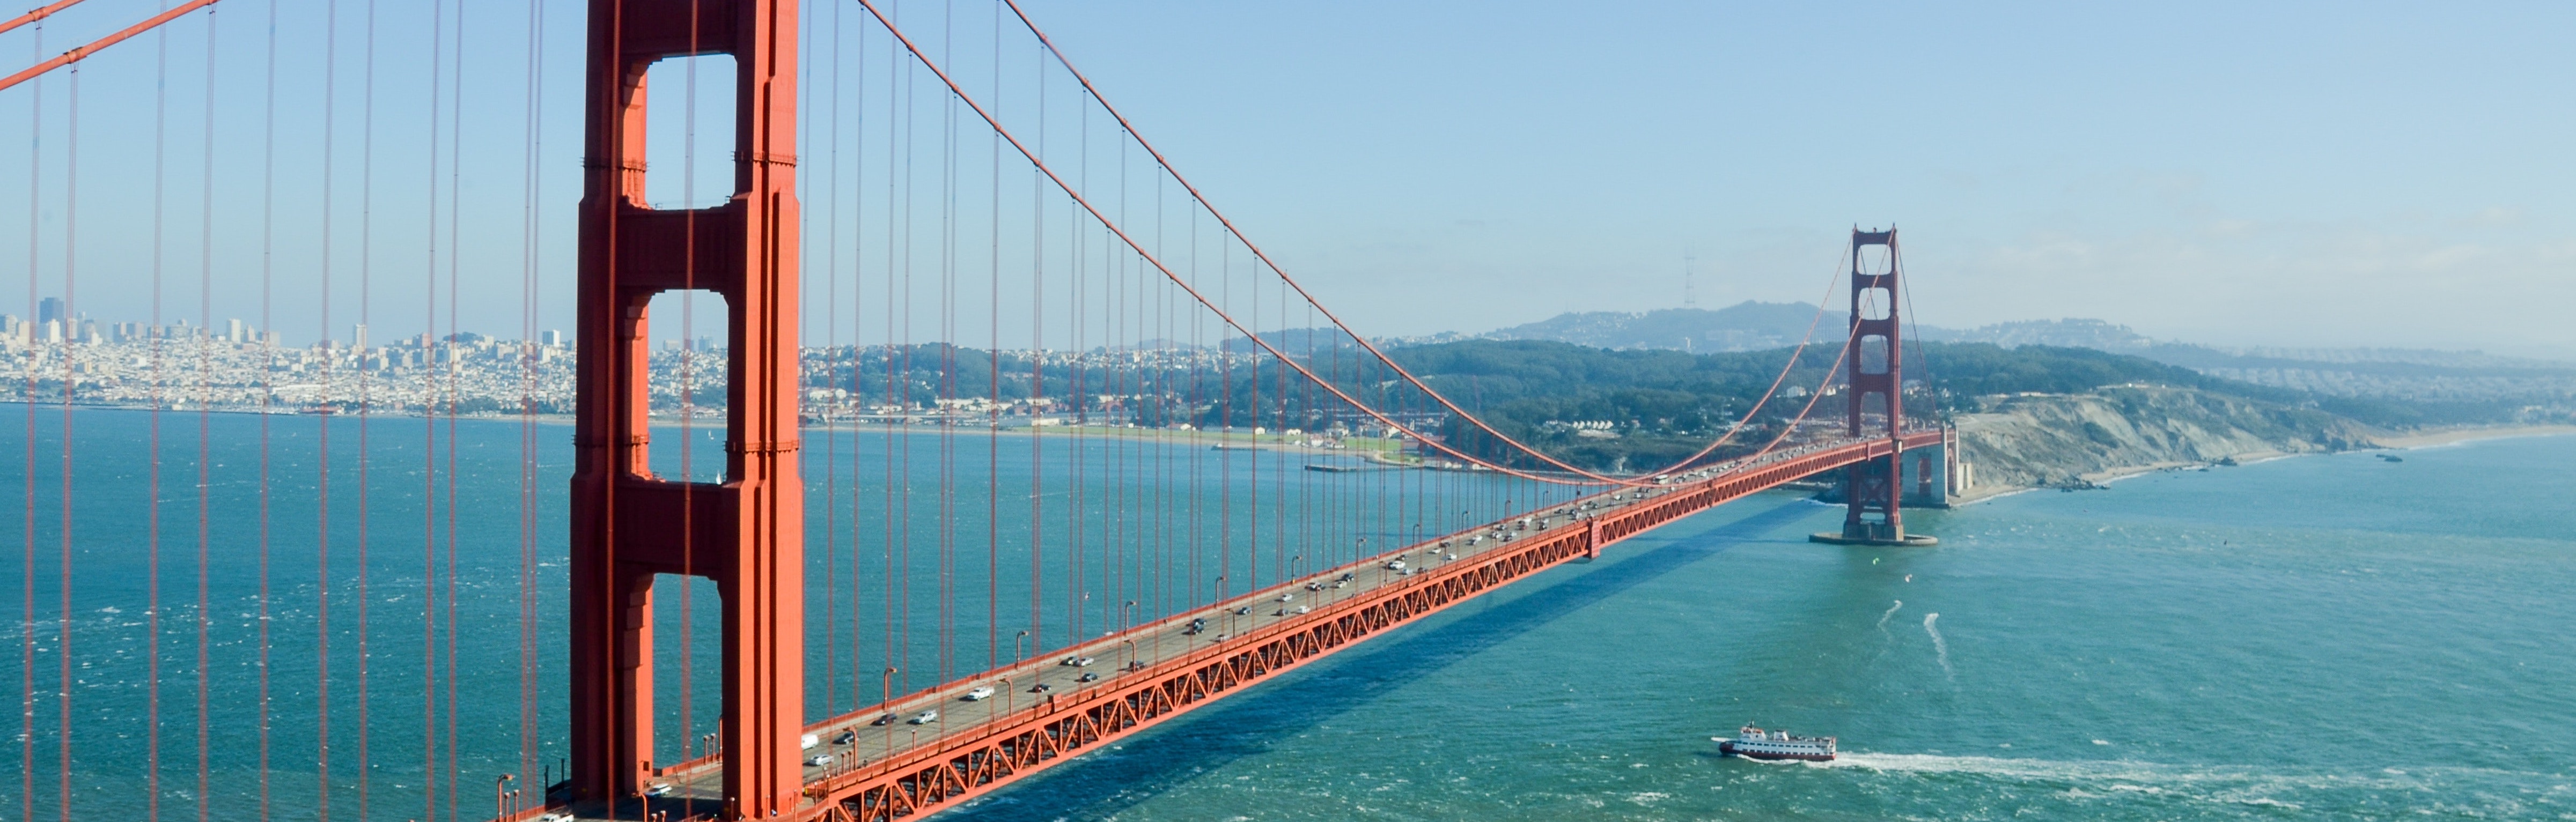 Landscape of San Francisco with Golden Gate bridge